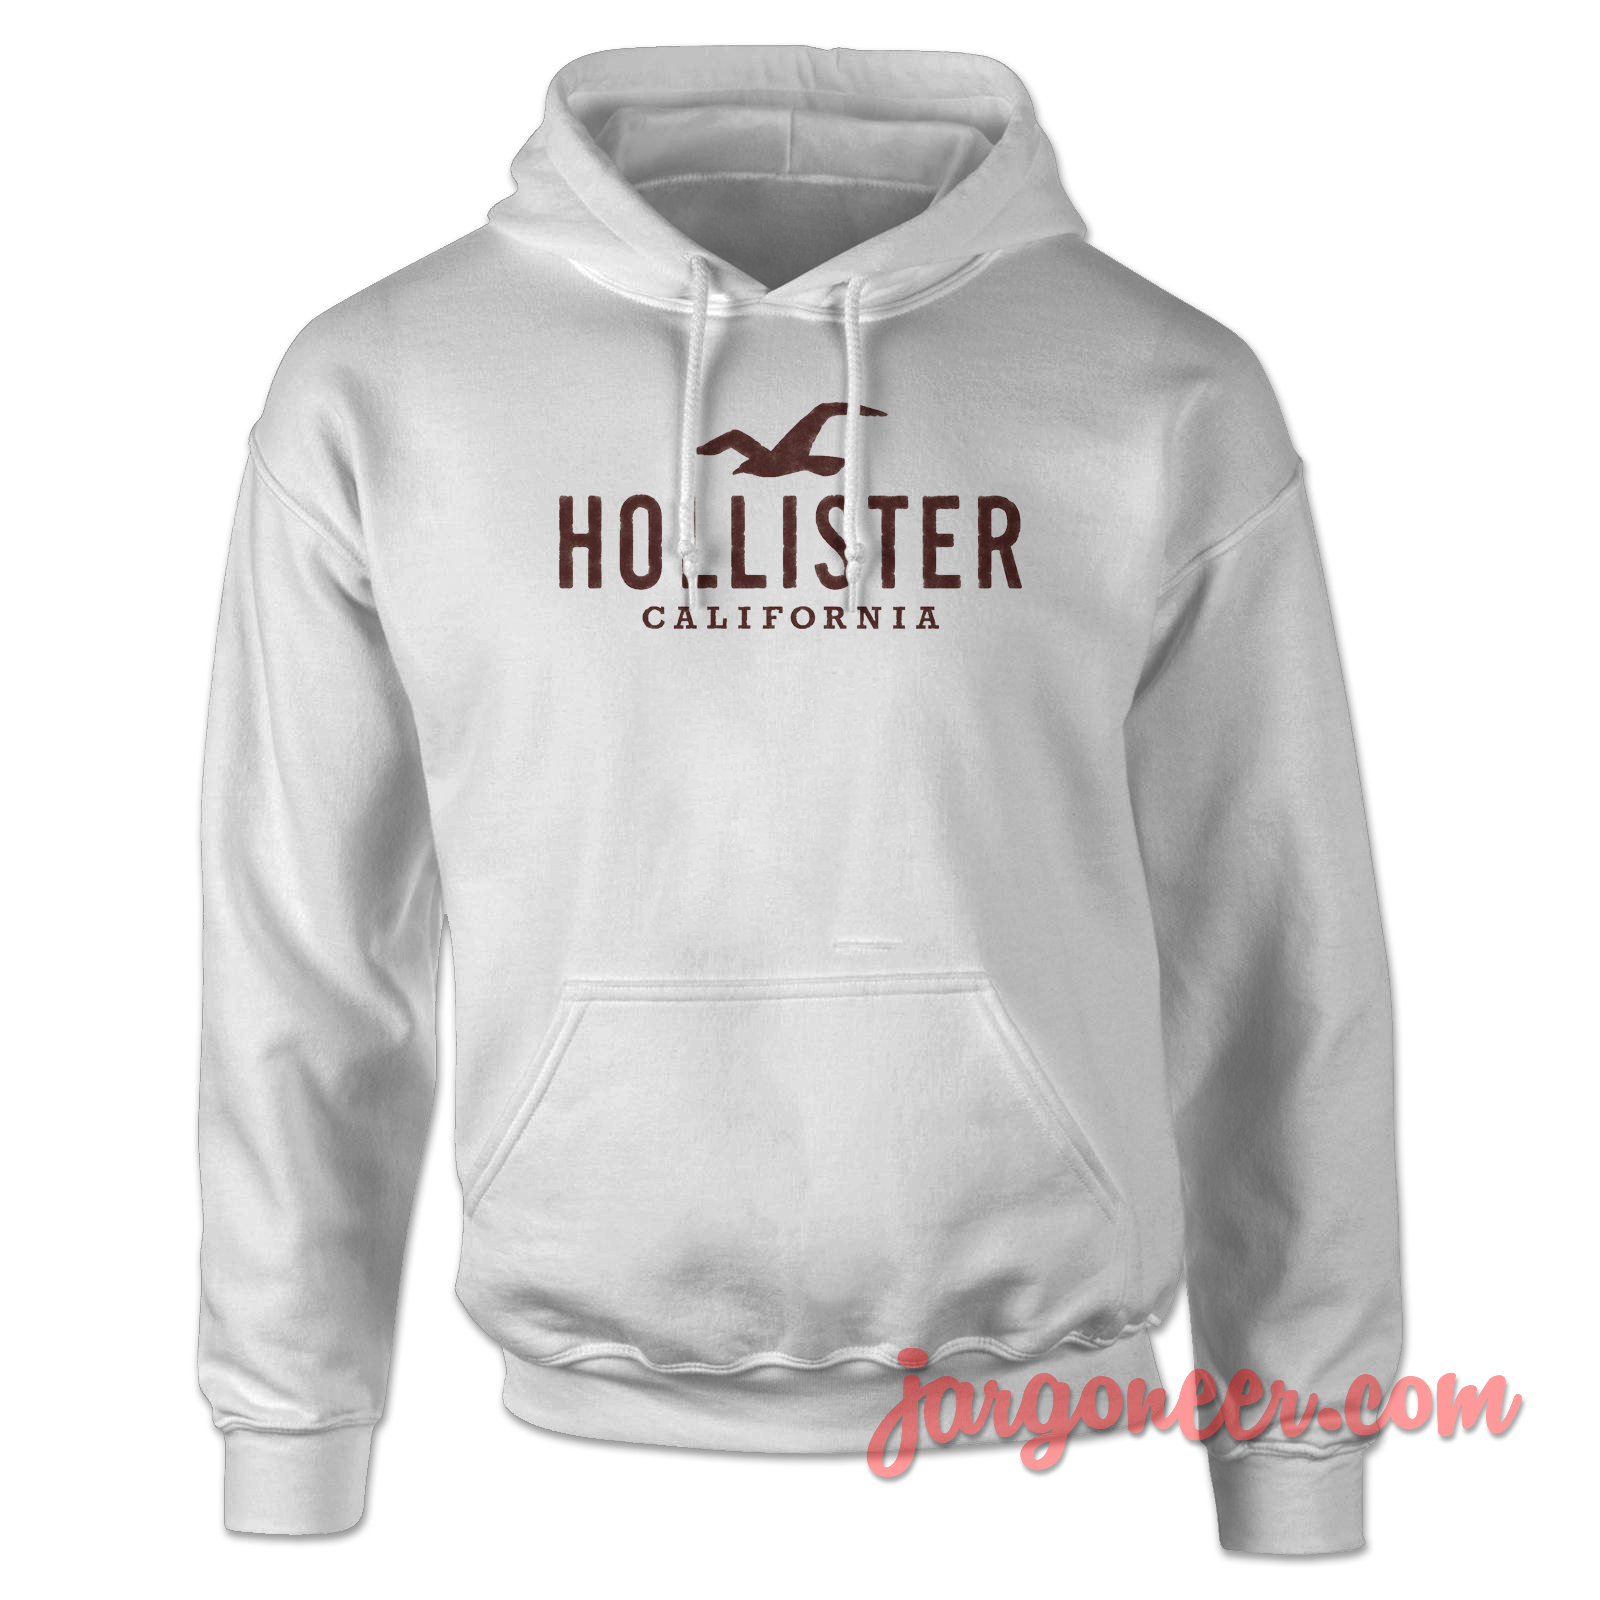 hollister hoodies price